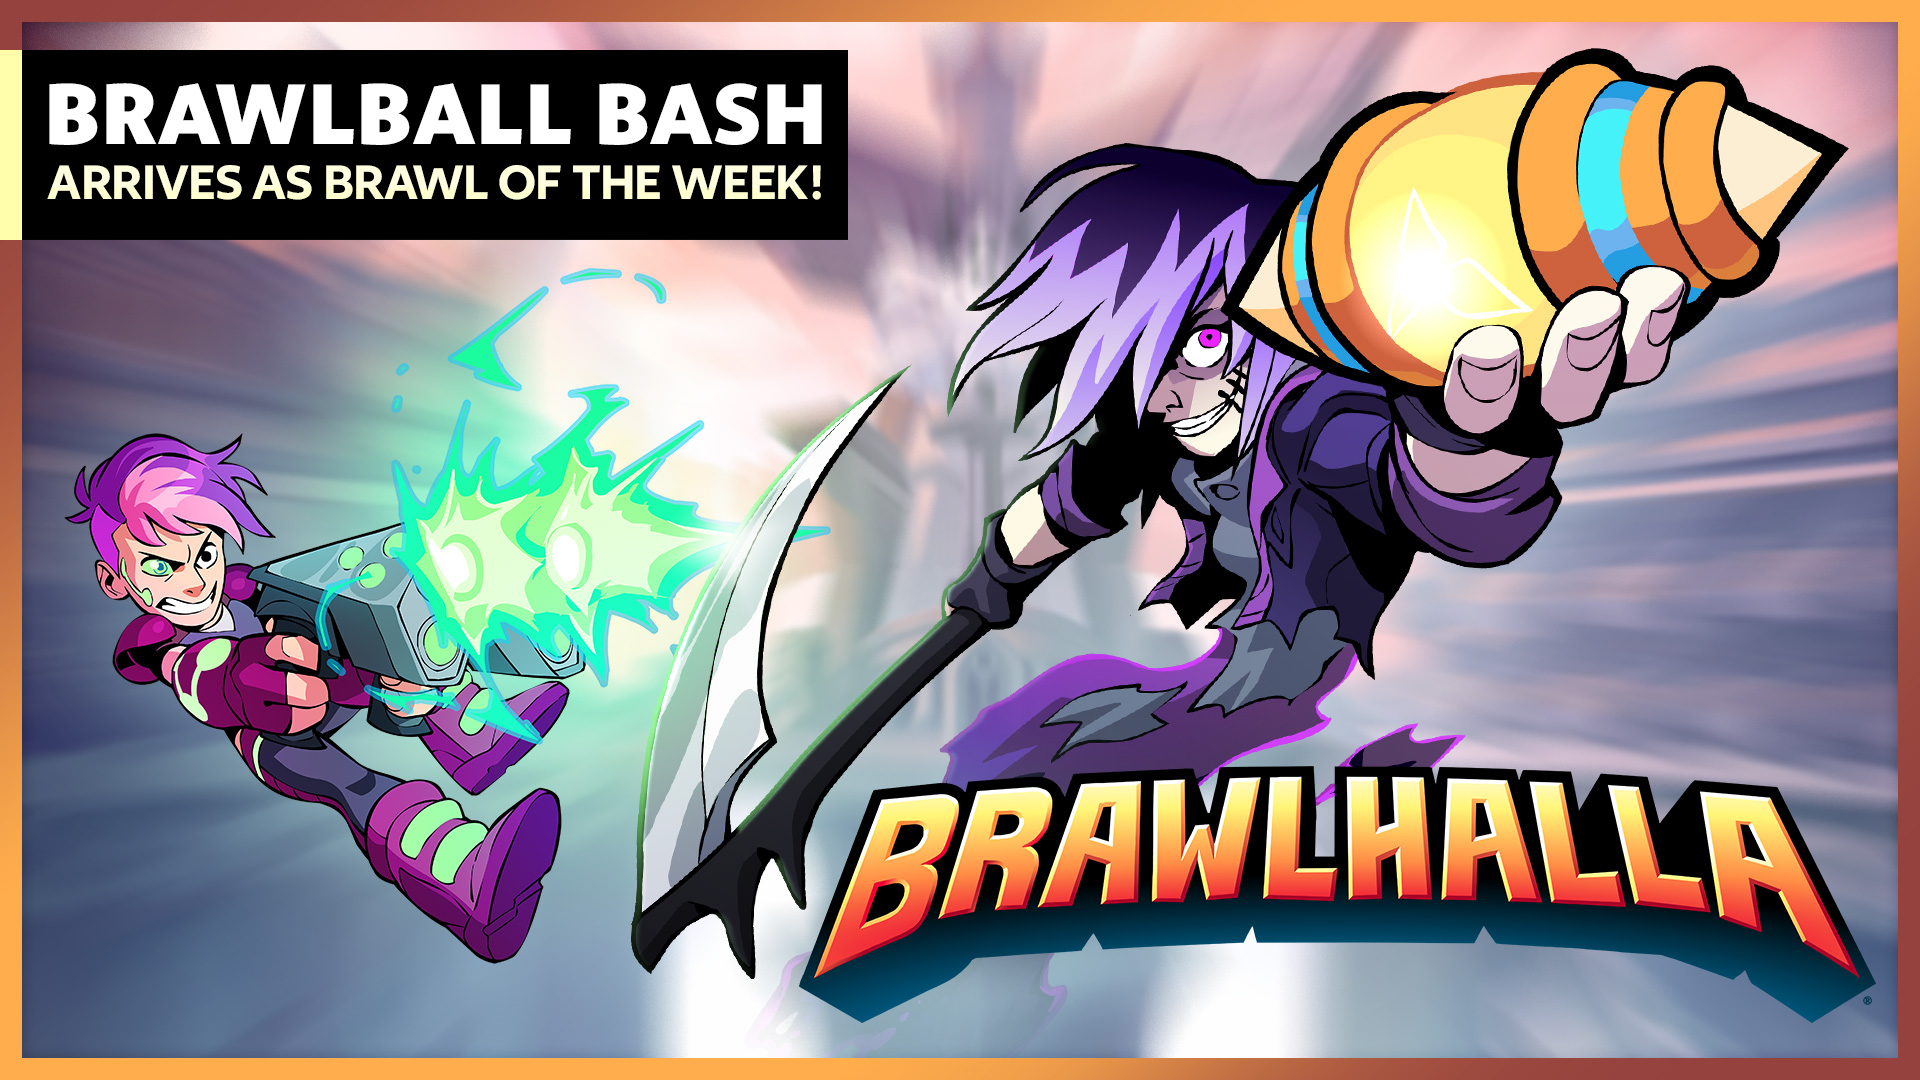 Brawlball Bash for Brawl of the Week!